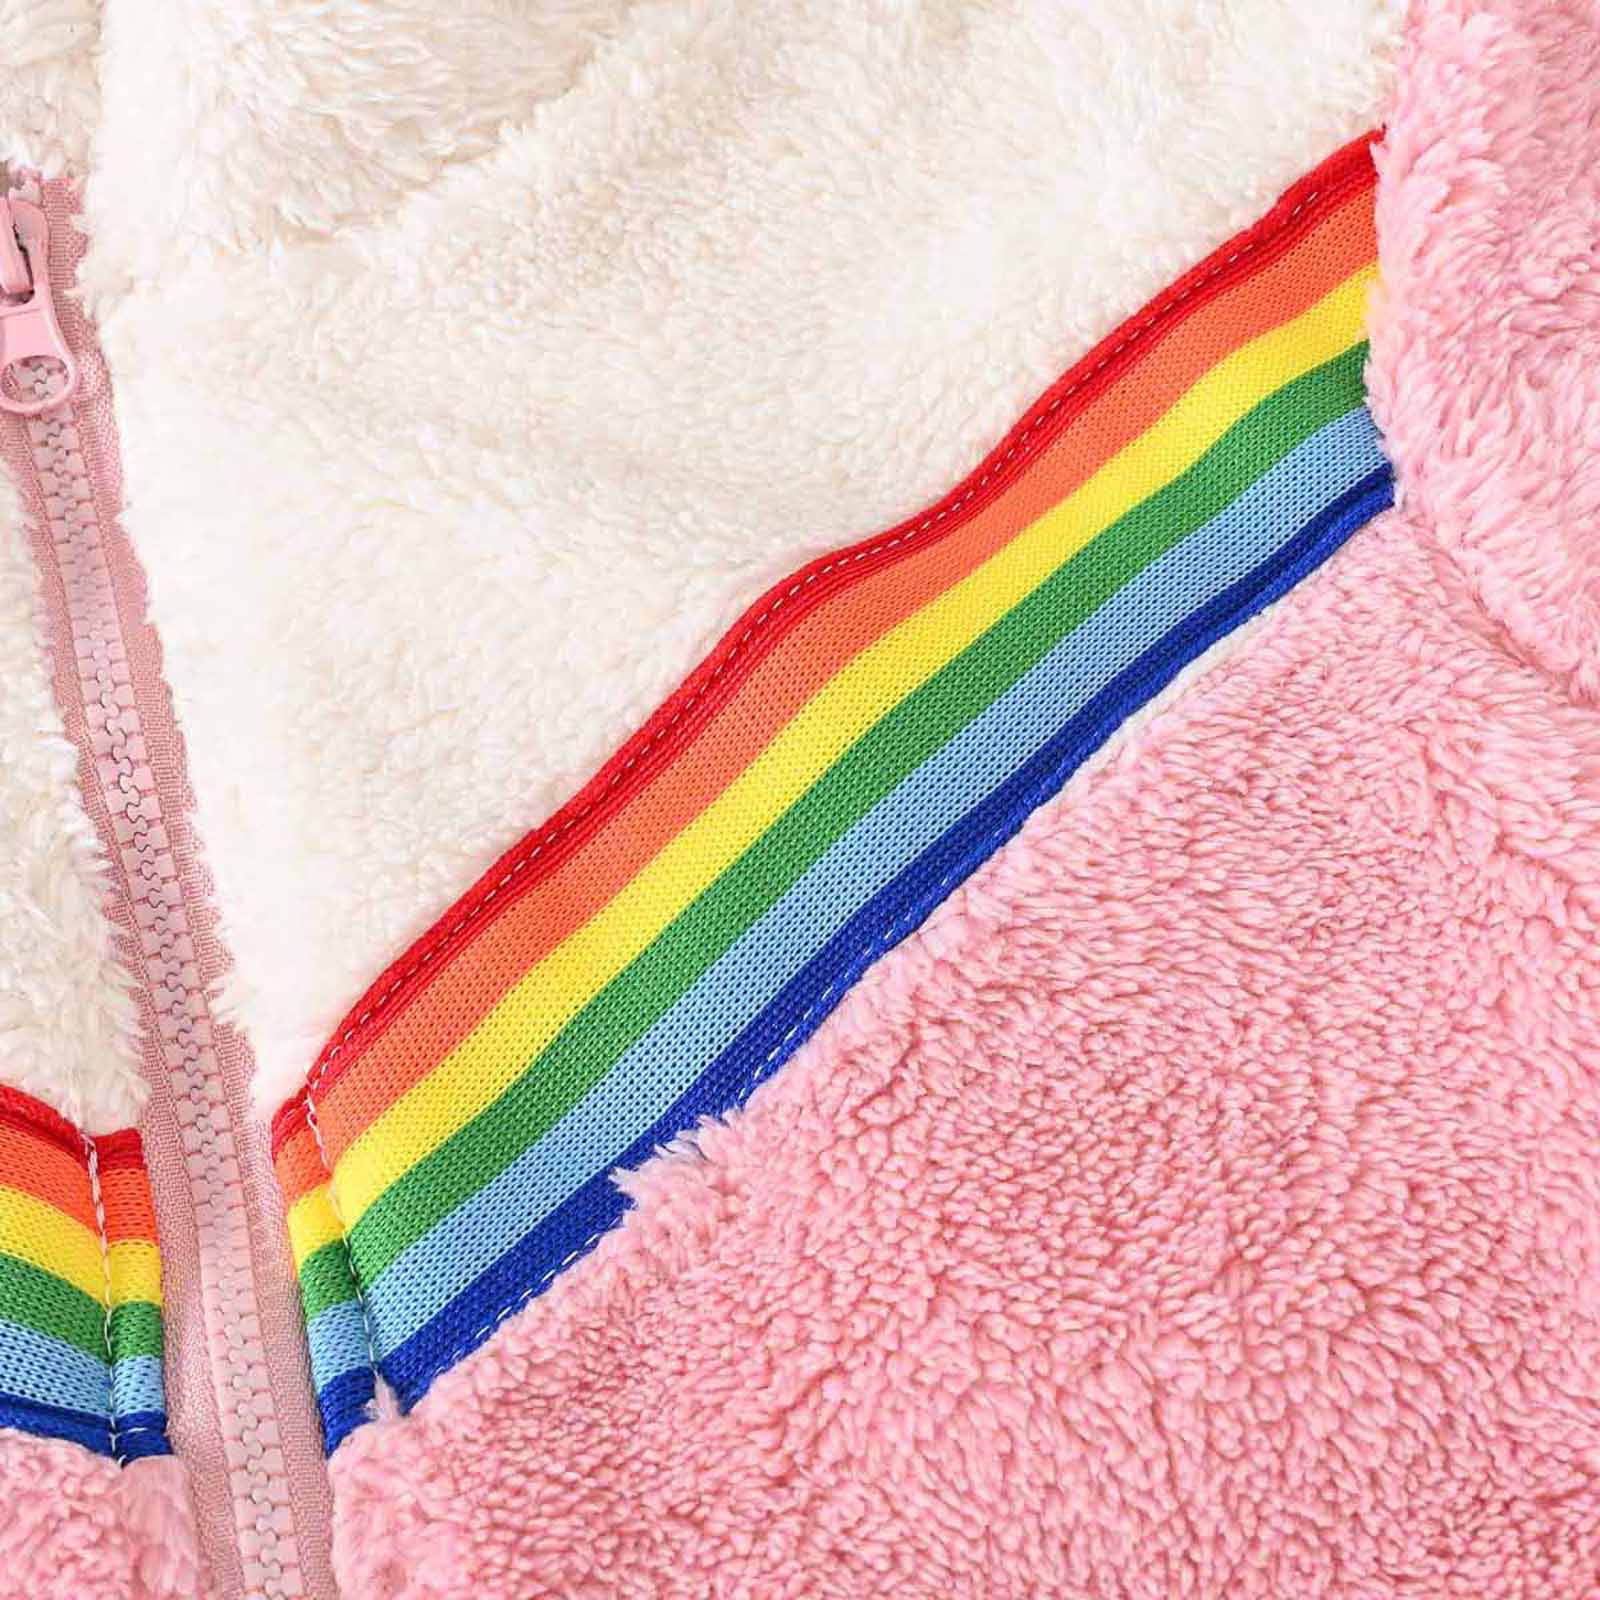 YYDGH Girls Zipper Jacket Fuzzy Sweatshirt Long Sleeve Casual Cozy Fleece Sherpa Outwear Coat Full-Zip Rainbow Jackets(Pink,4-5 Years) - image 3 of 8